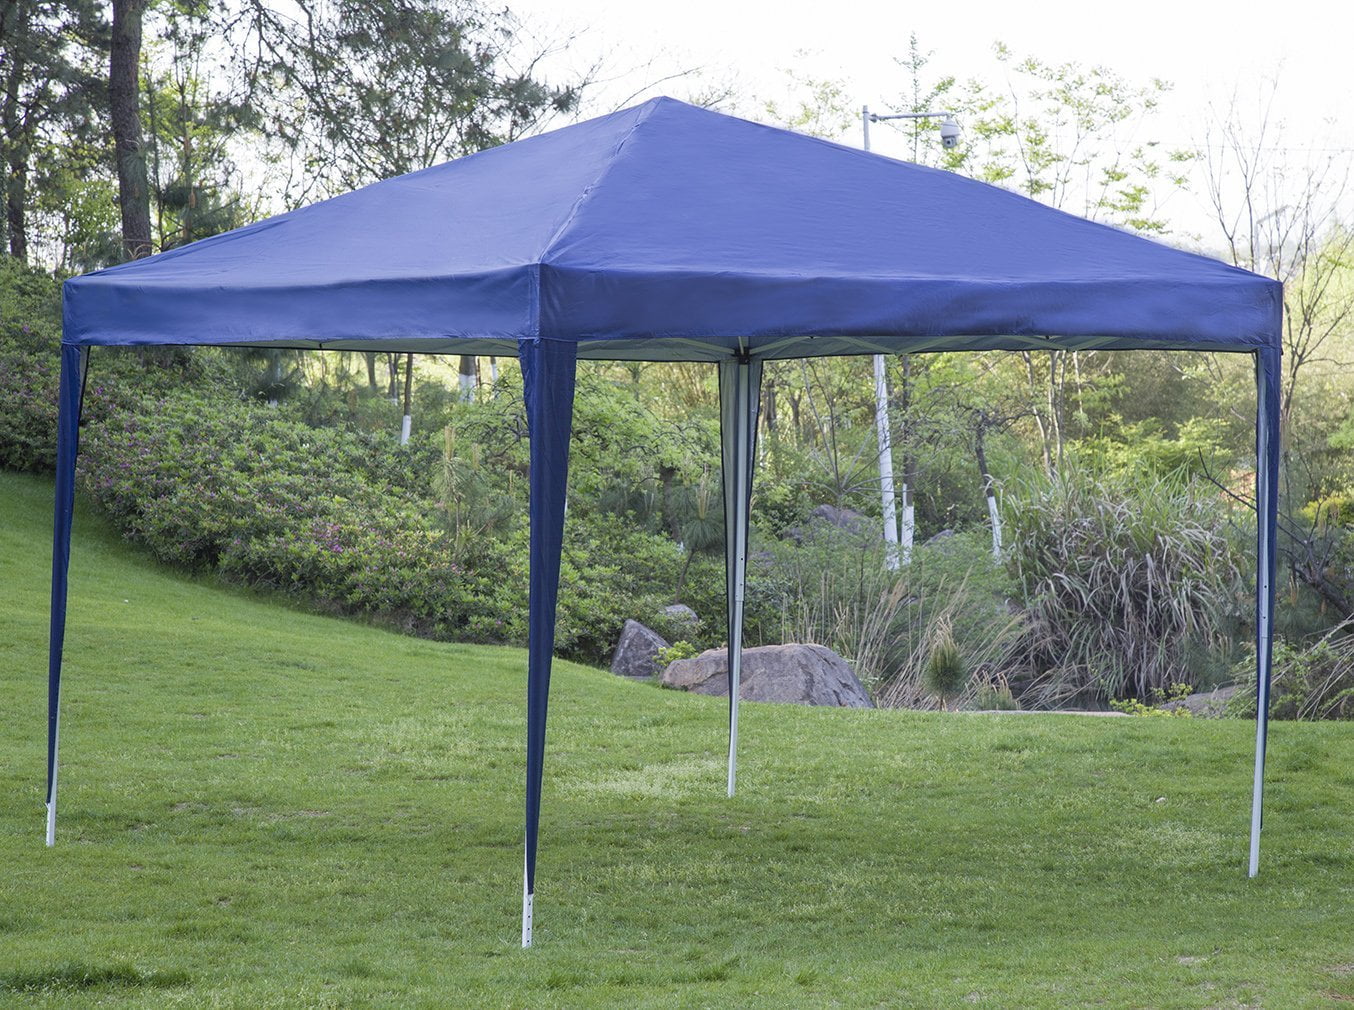 Details about   10'x10' Canopy Outdoor Patio Wedding Party Tent Folding Gazebo Pavilion Event US 